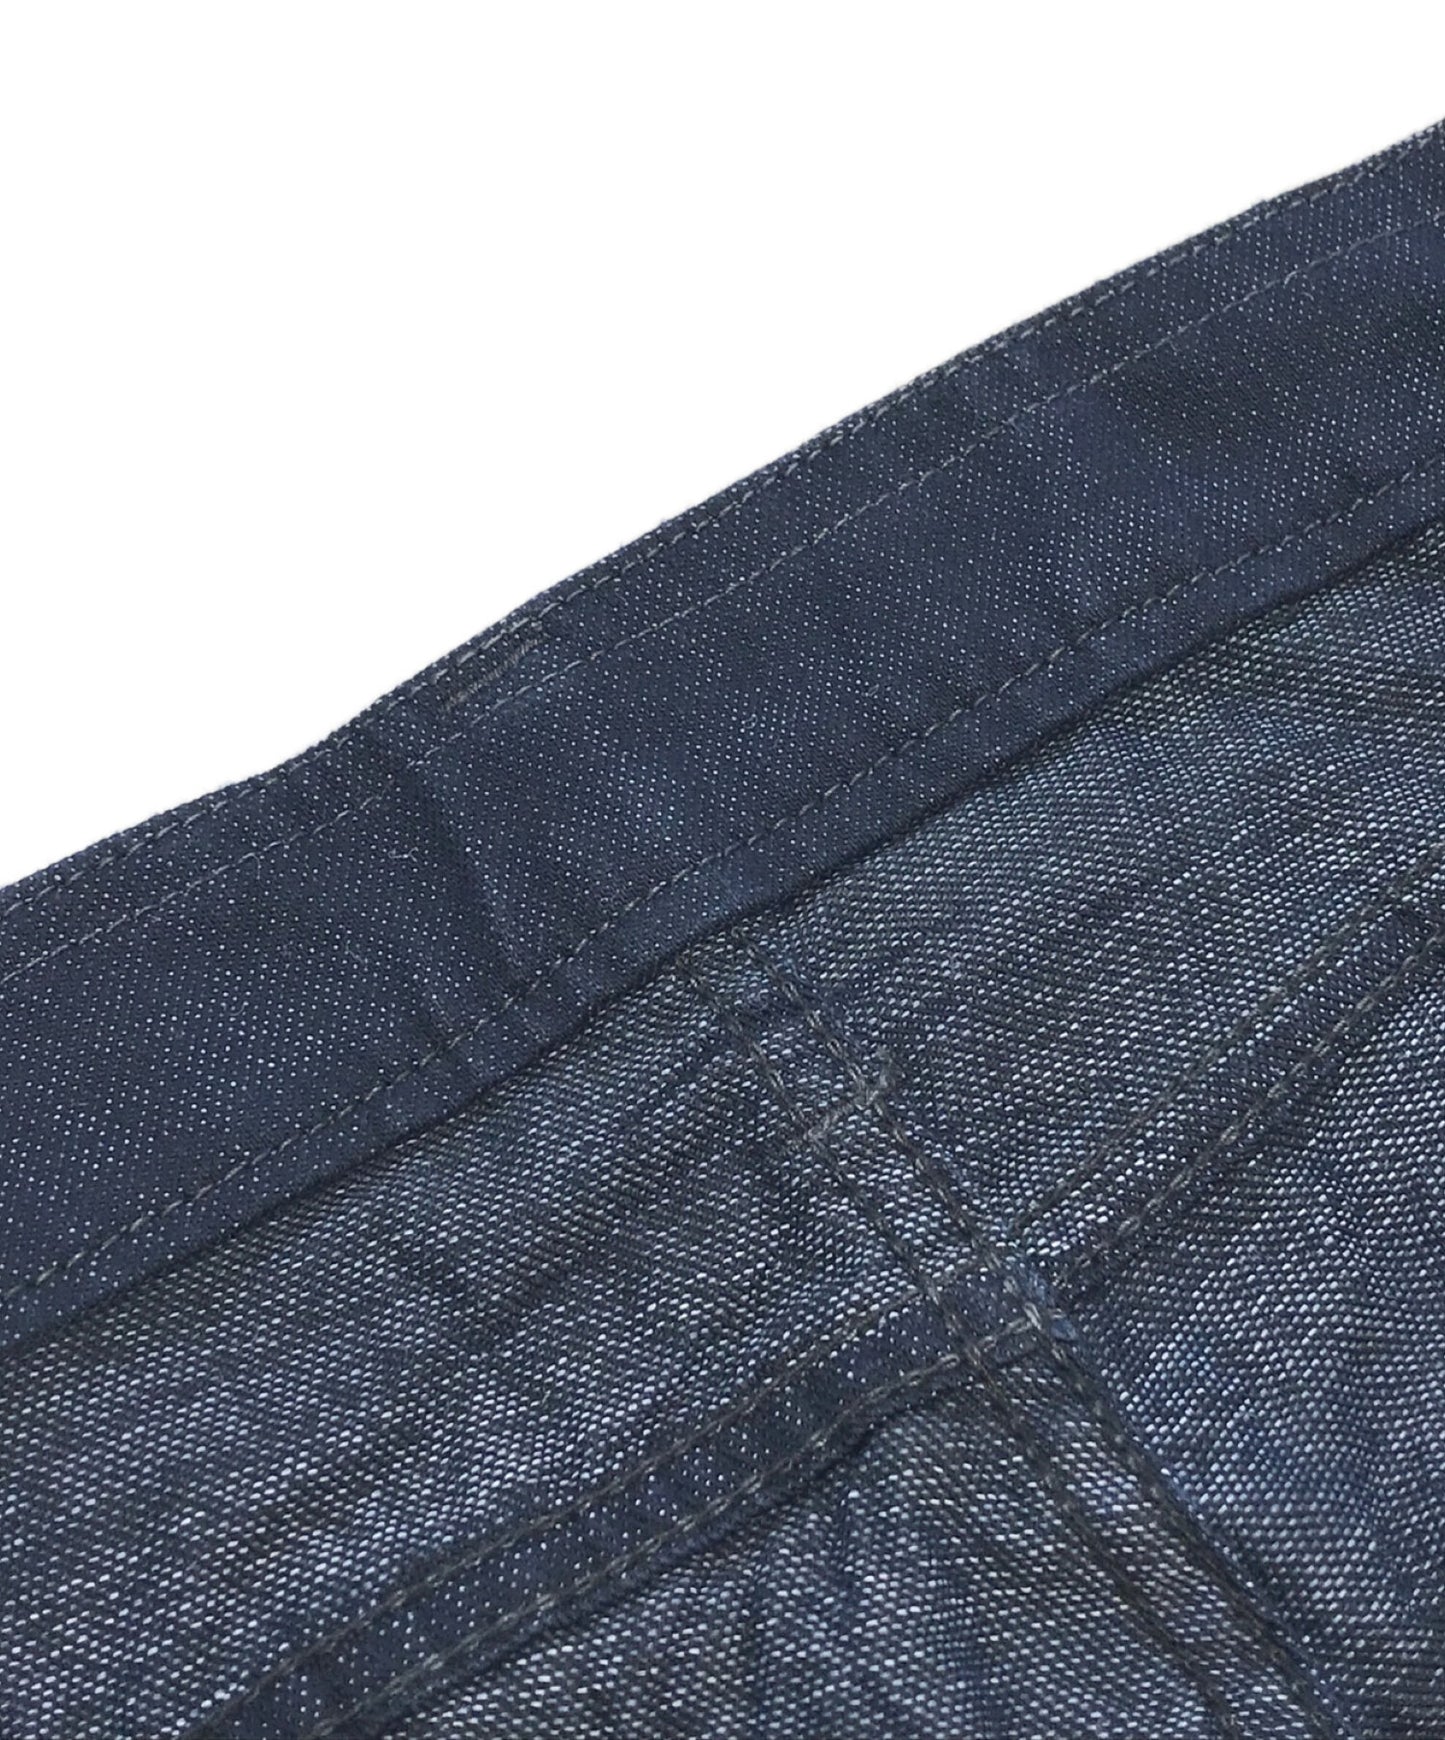 [Pre-owned] ISSEY MIYAKE MEN Owned crinkle-effect Jeans ME43FF141